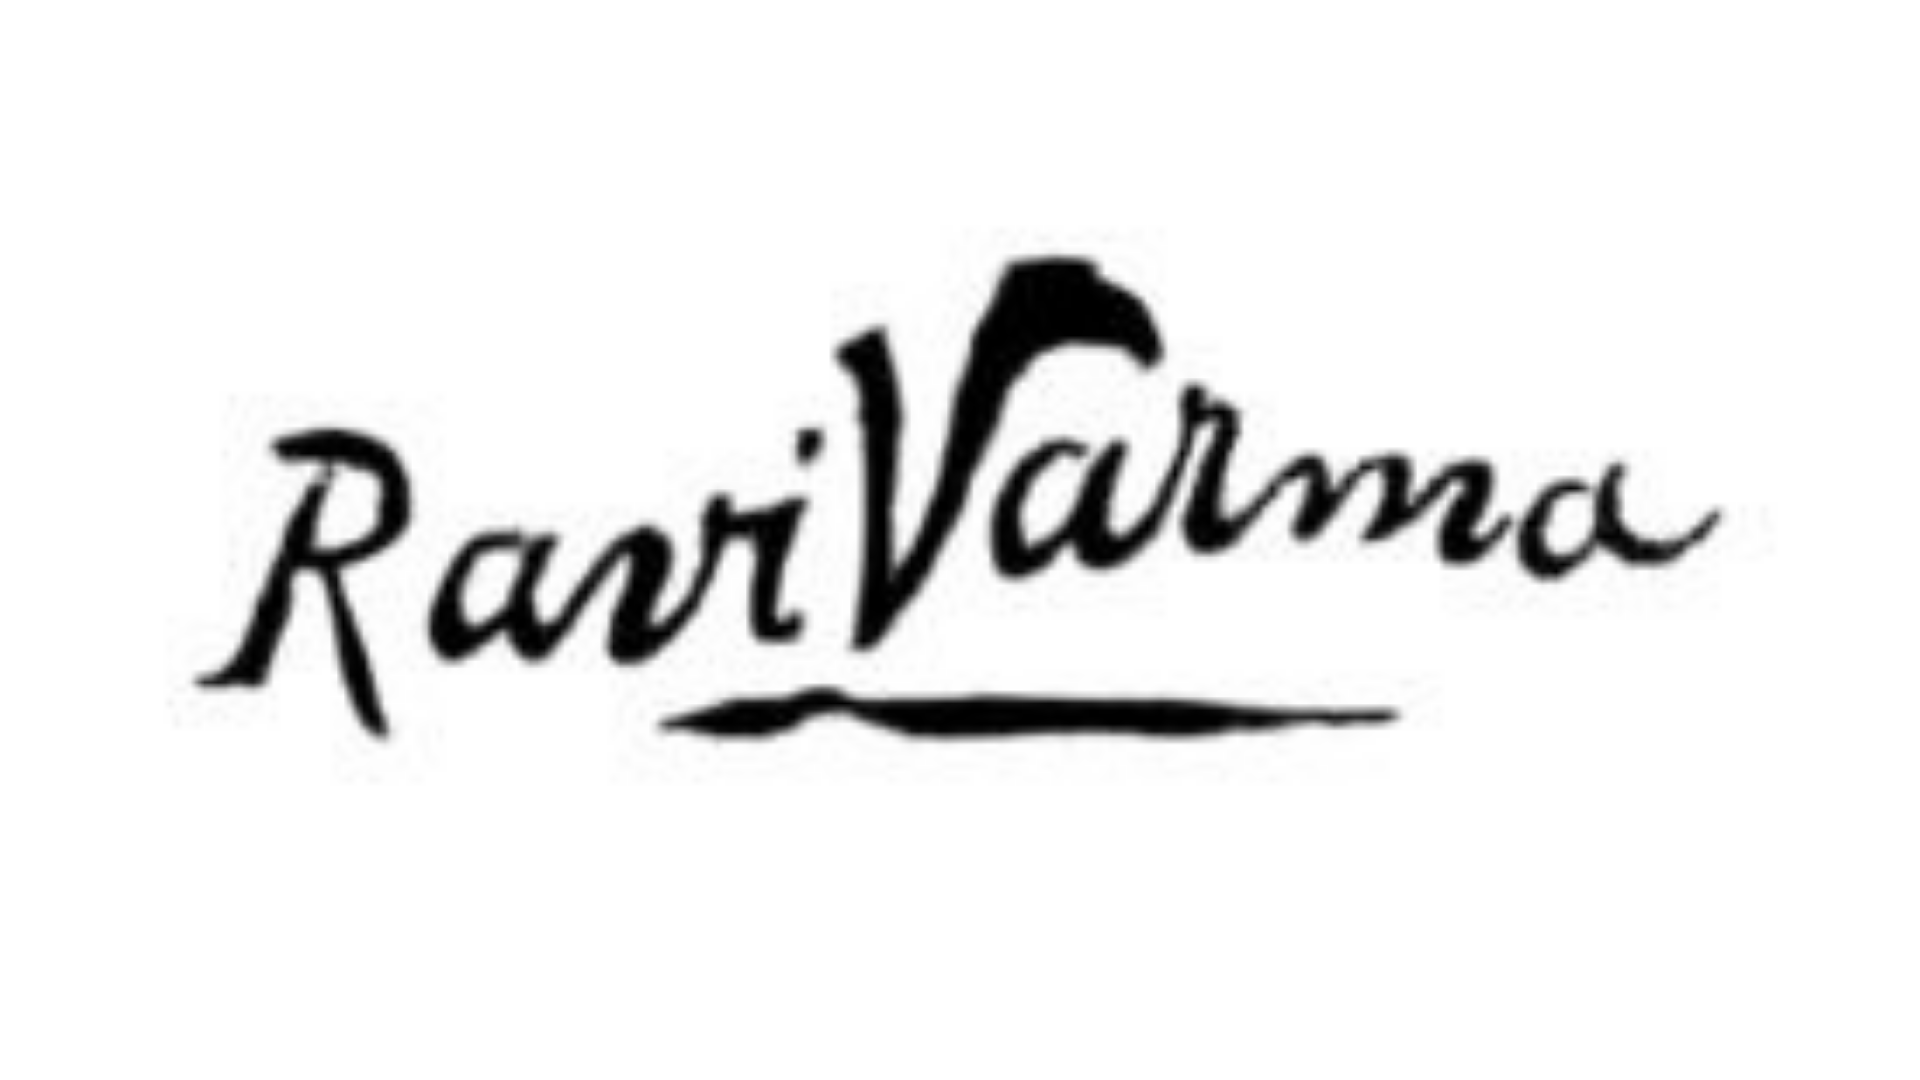 The name of the artist ‘Ravi Varma’ appeared below each print